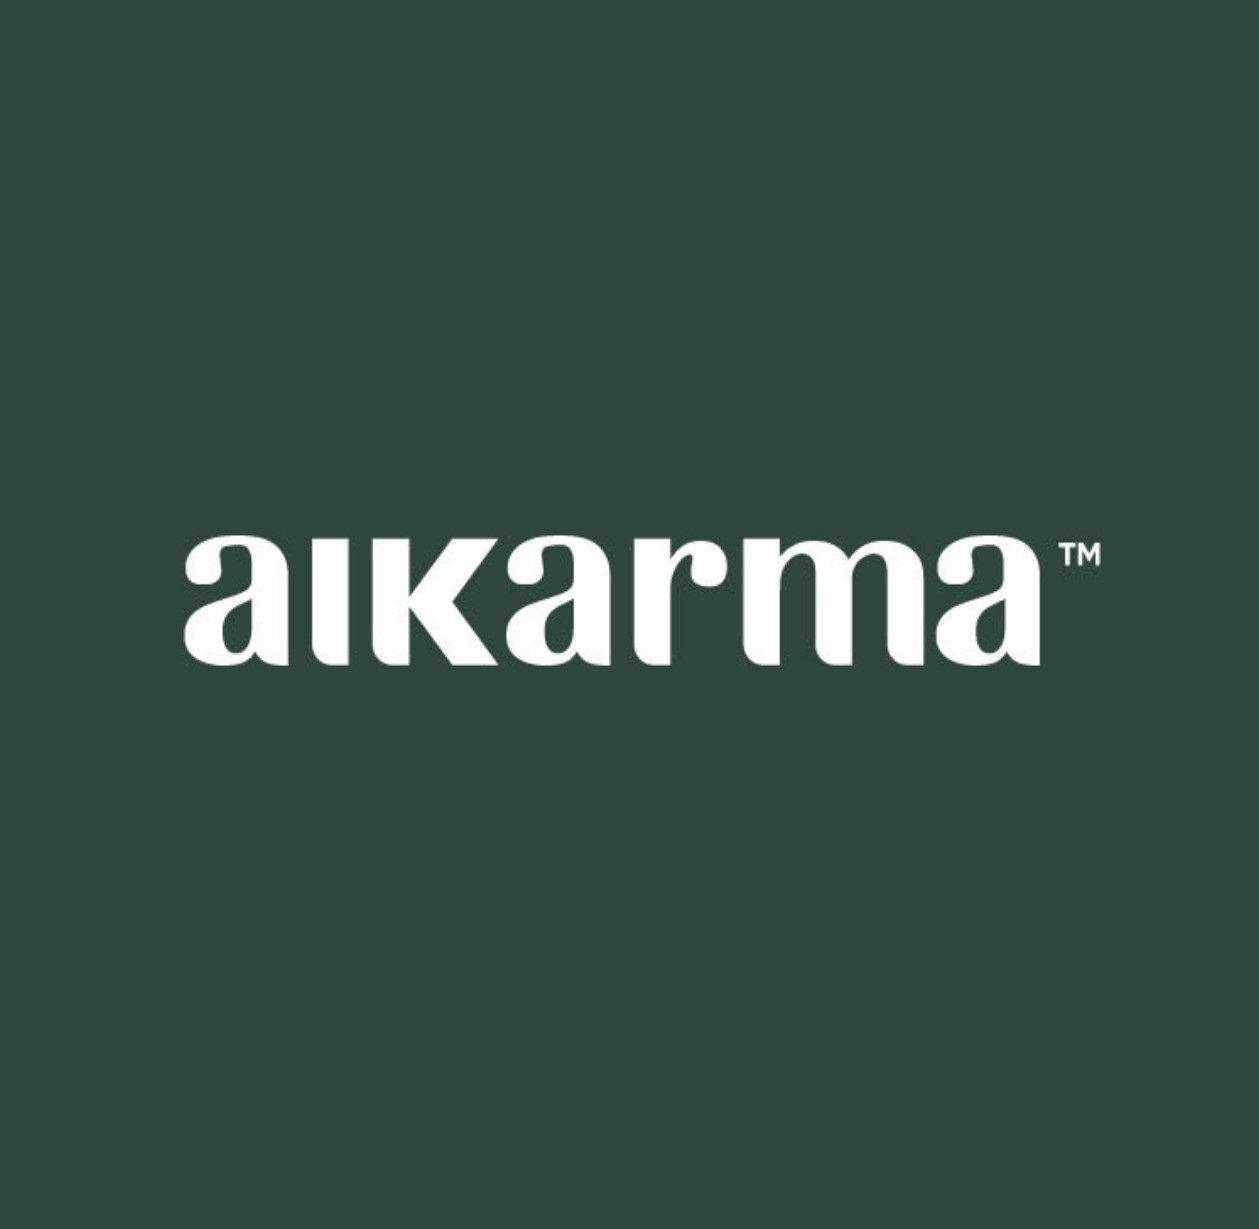 Alkarma Developments